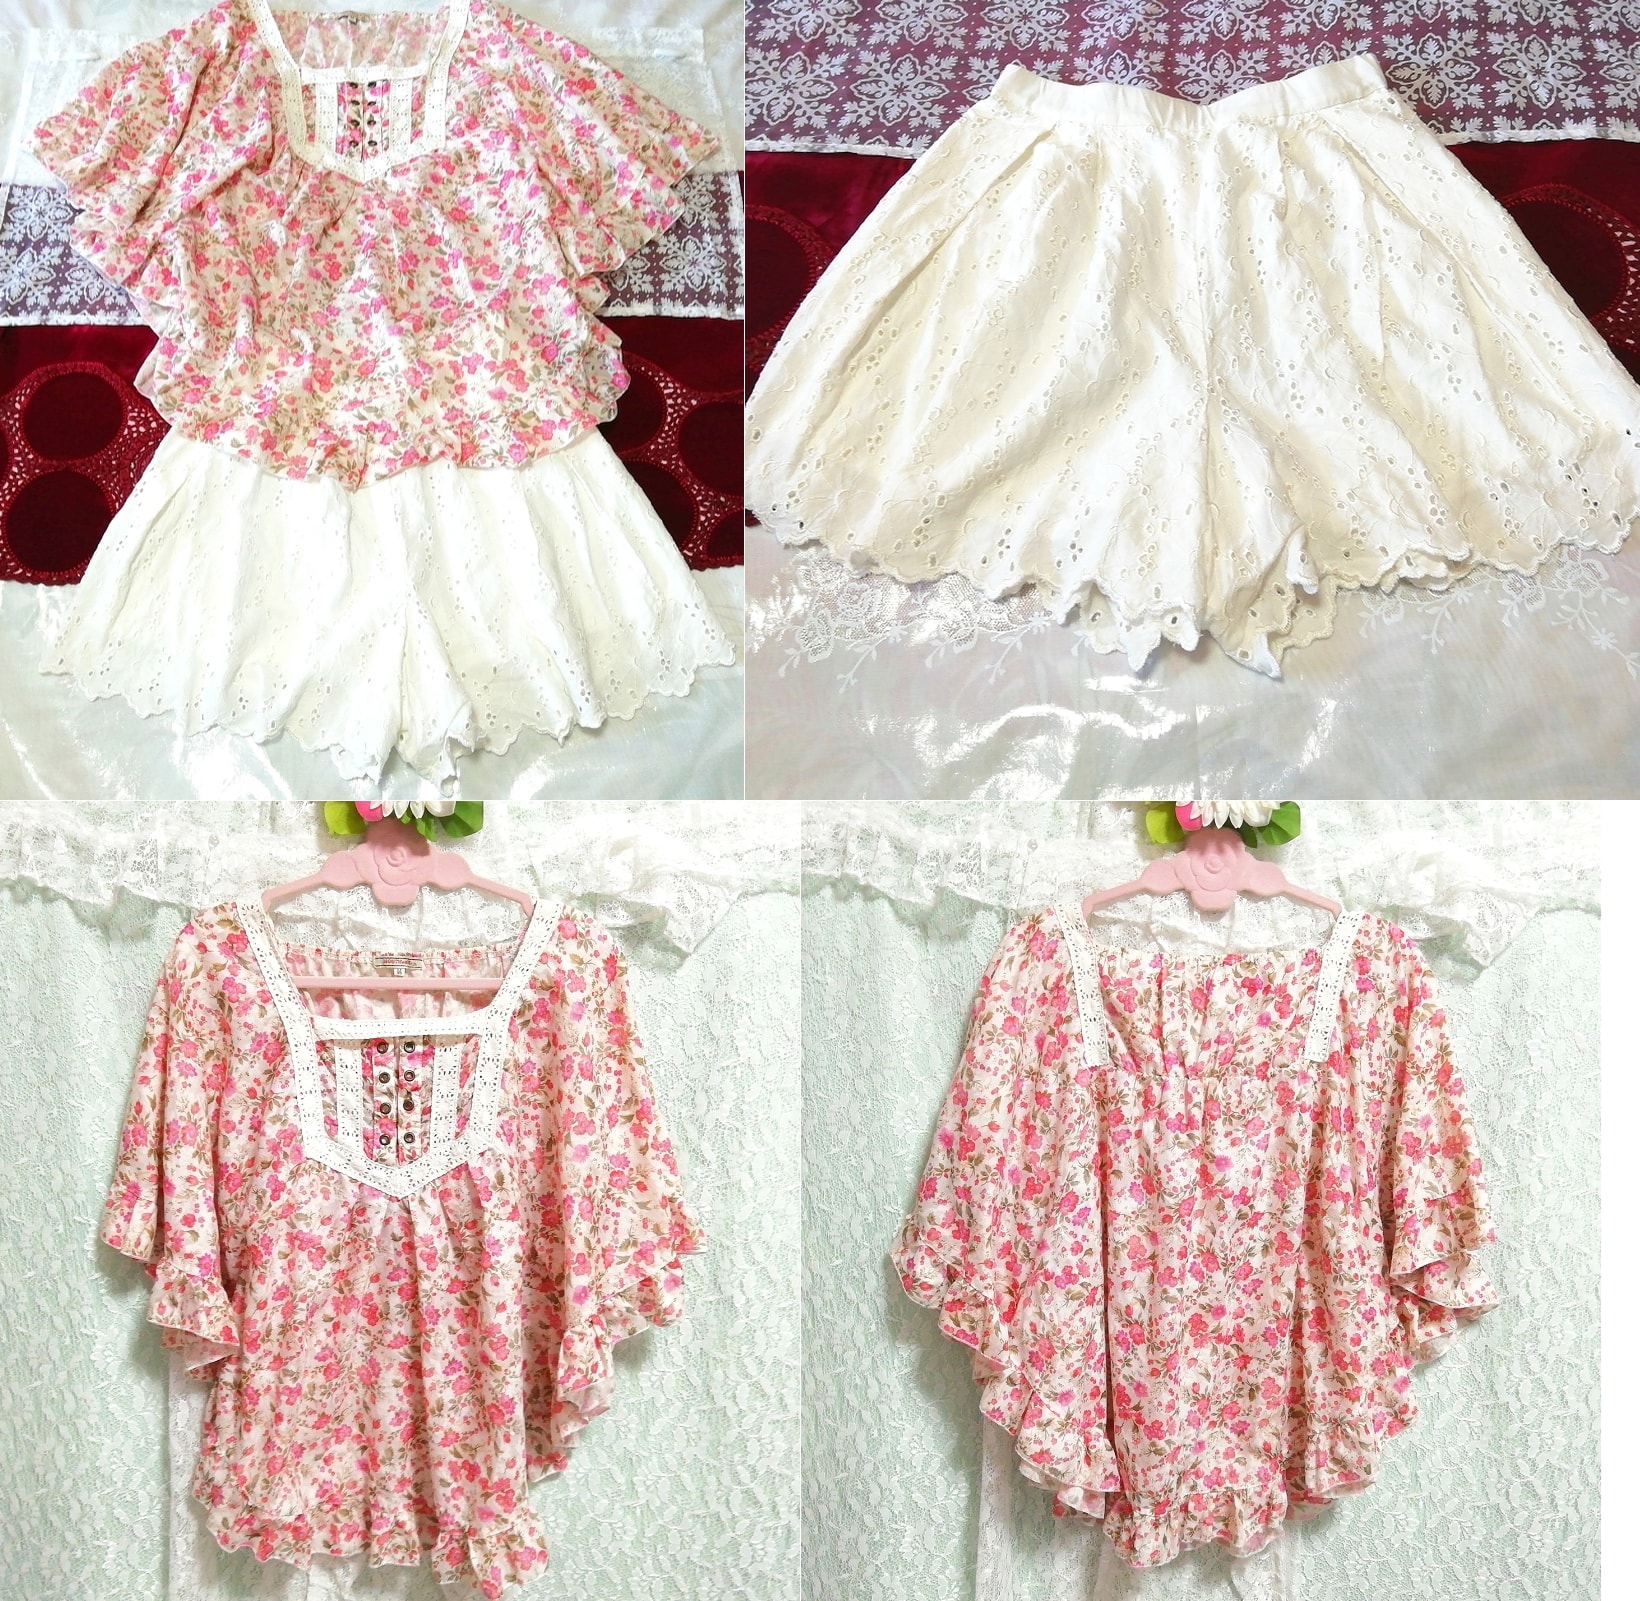 Poncho pink floral pattern ruffle tunic negligee nightgown nightwear white shorts 2P, fashion, ladies' fashion, nightwear, pajamas